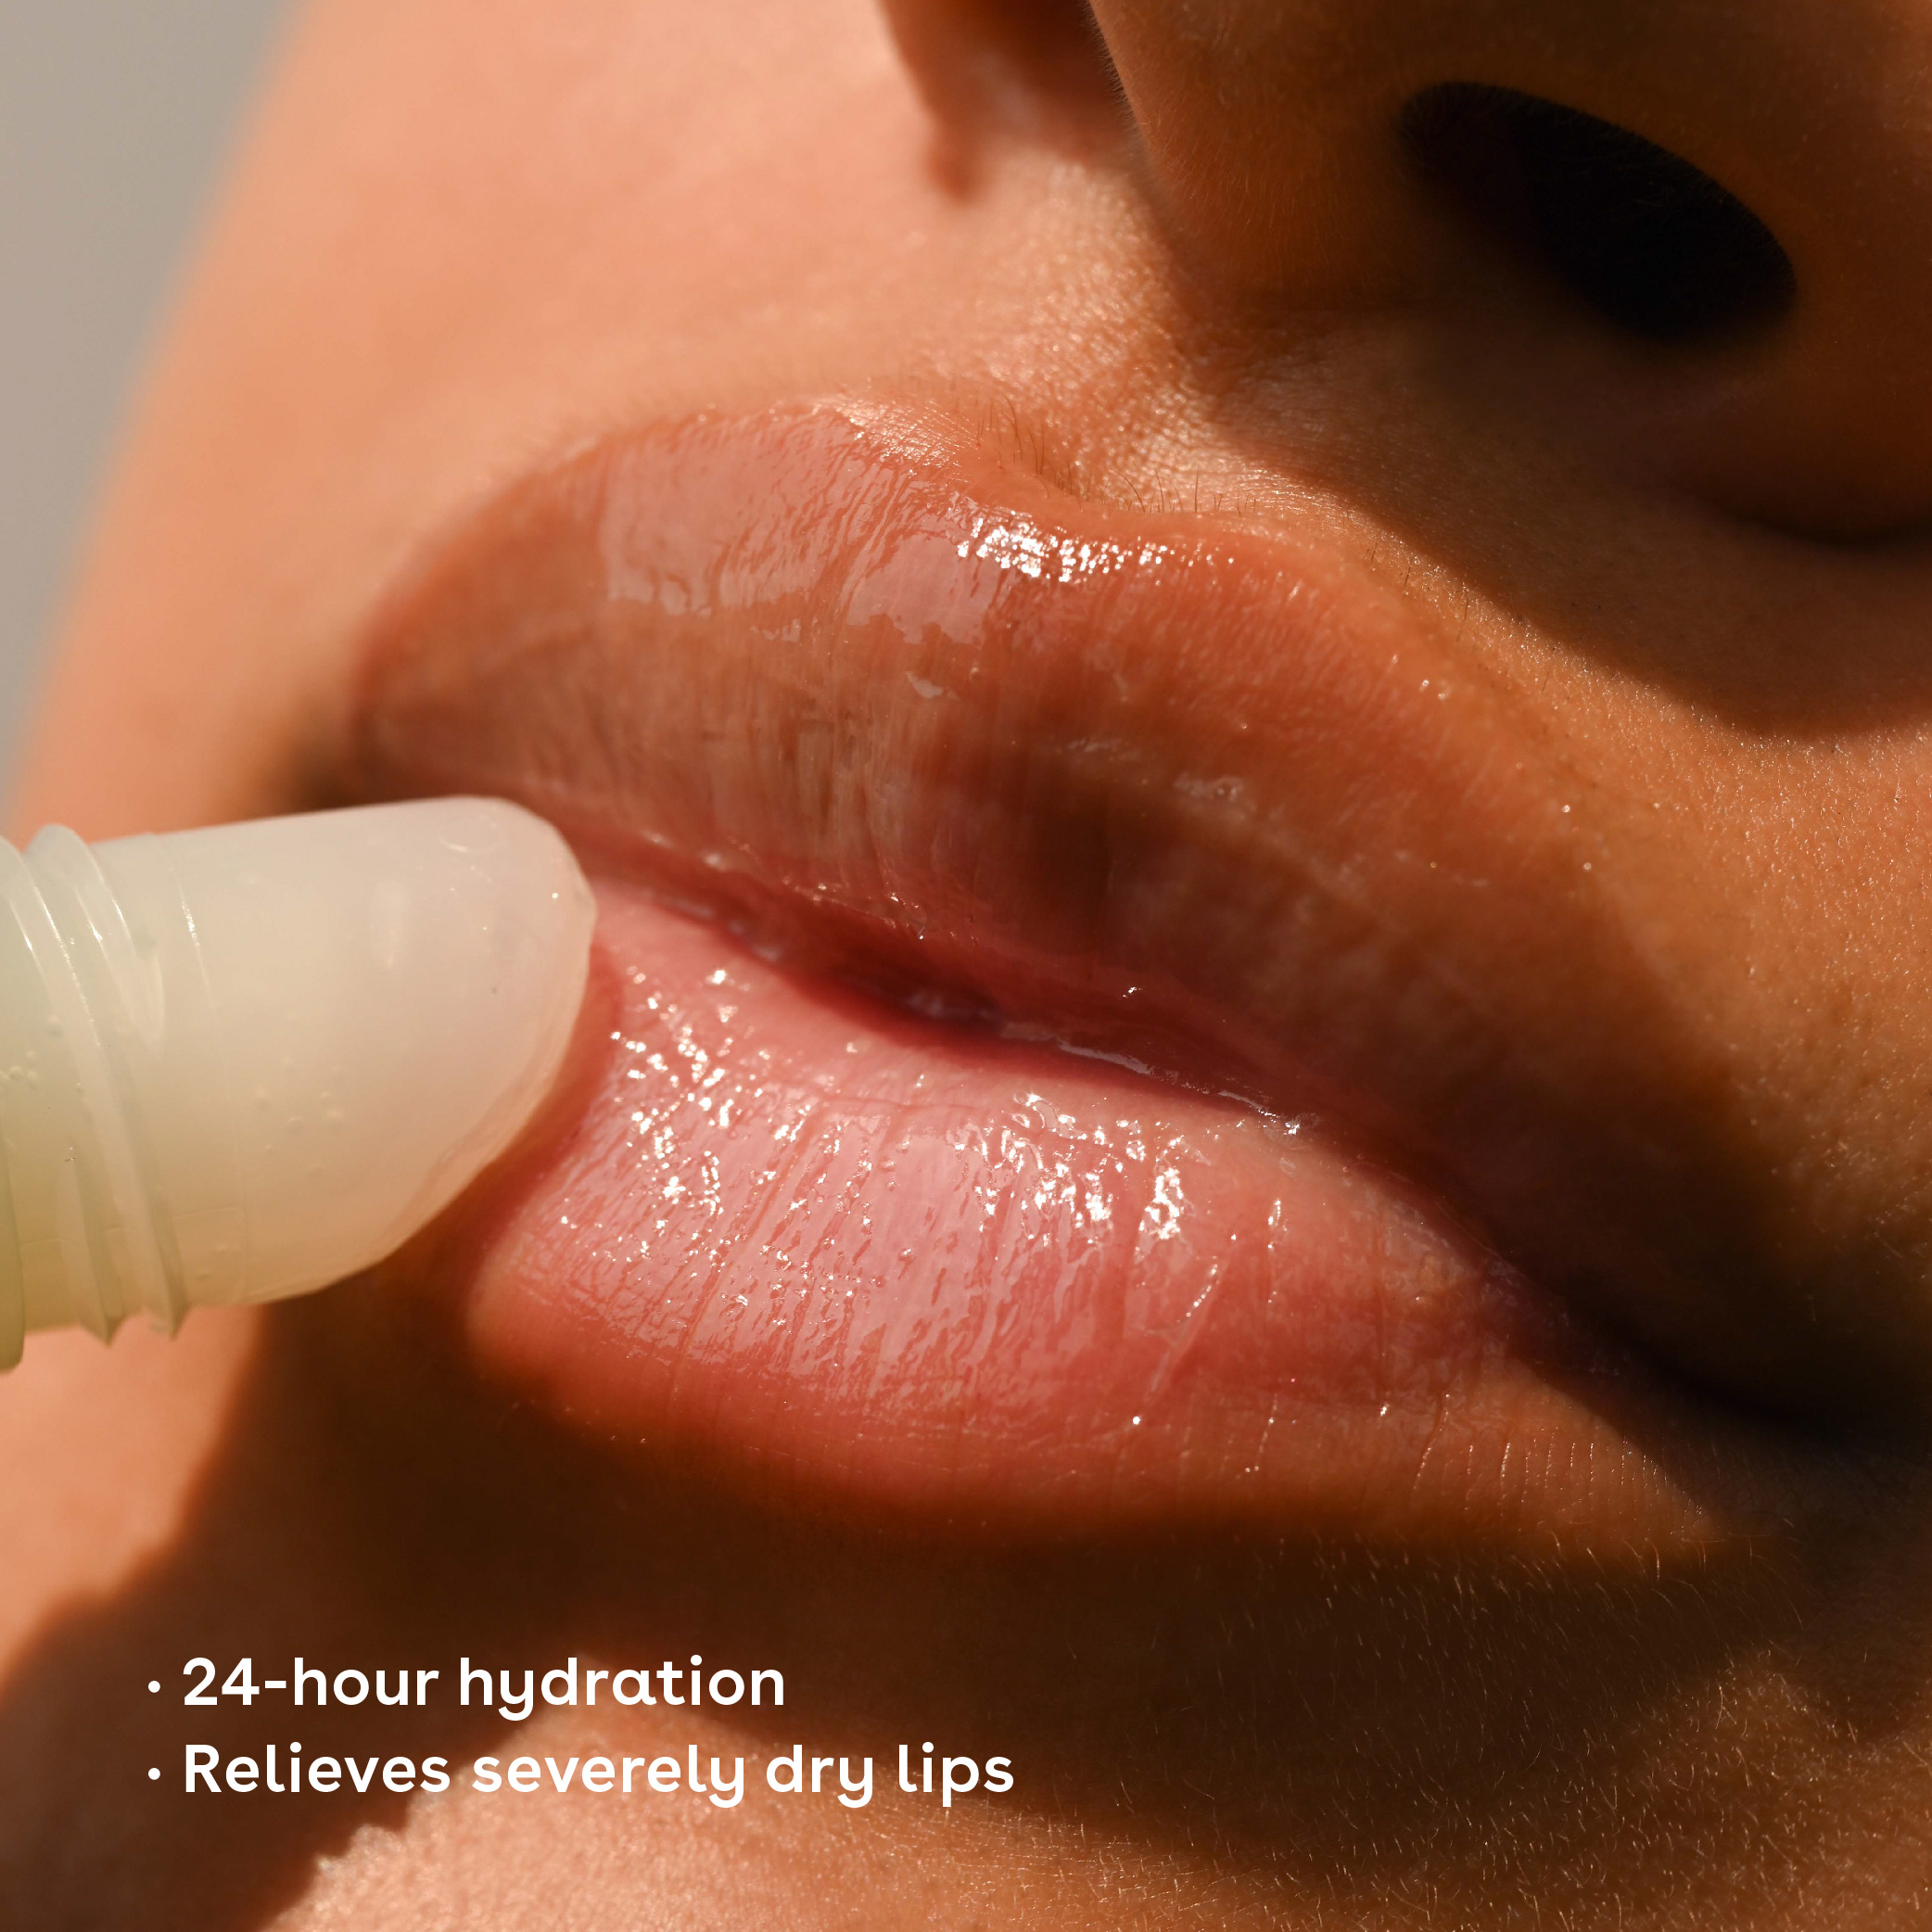 Eos The Hero Extra Dry Lip Balm Treatment - 0.35 fl oz/1pk - image 3 of 8